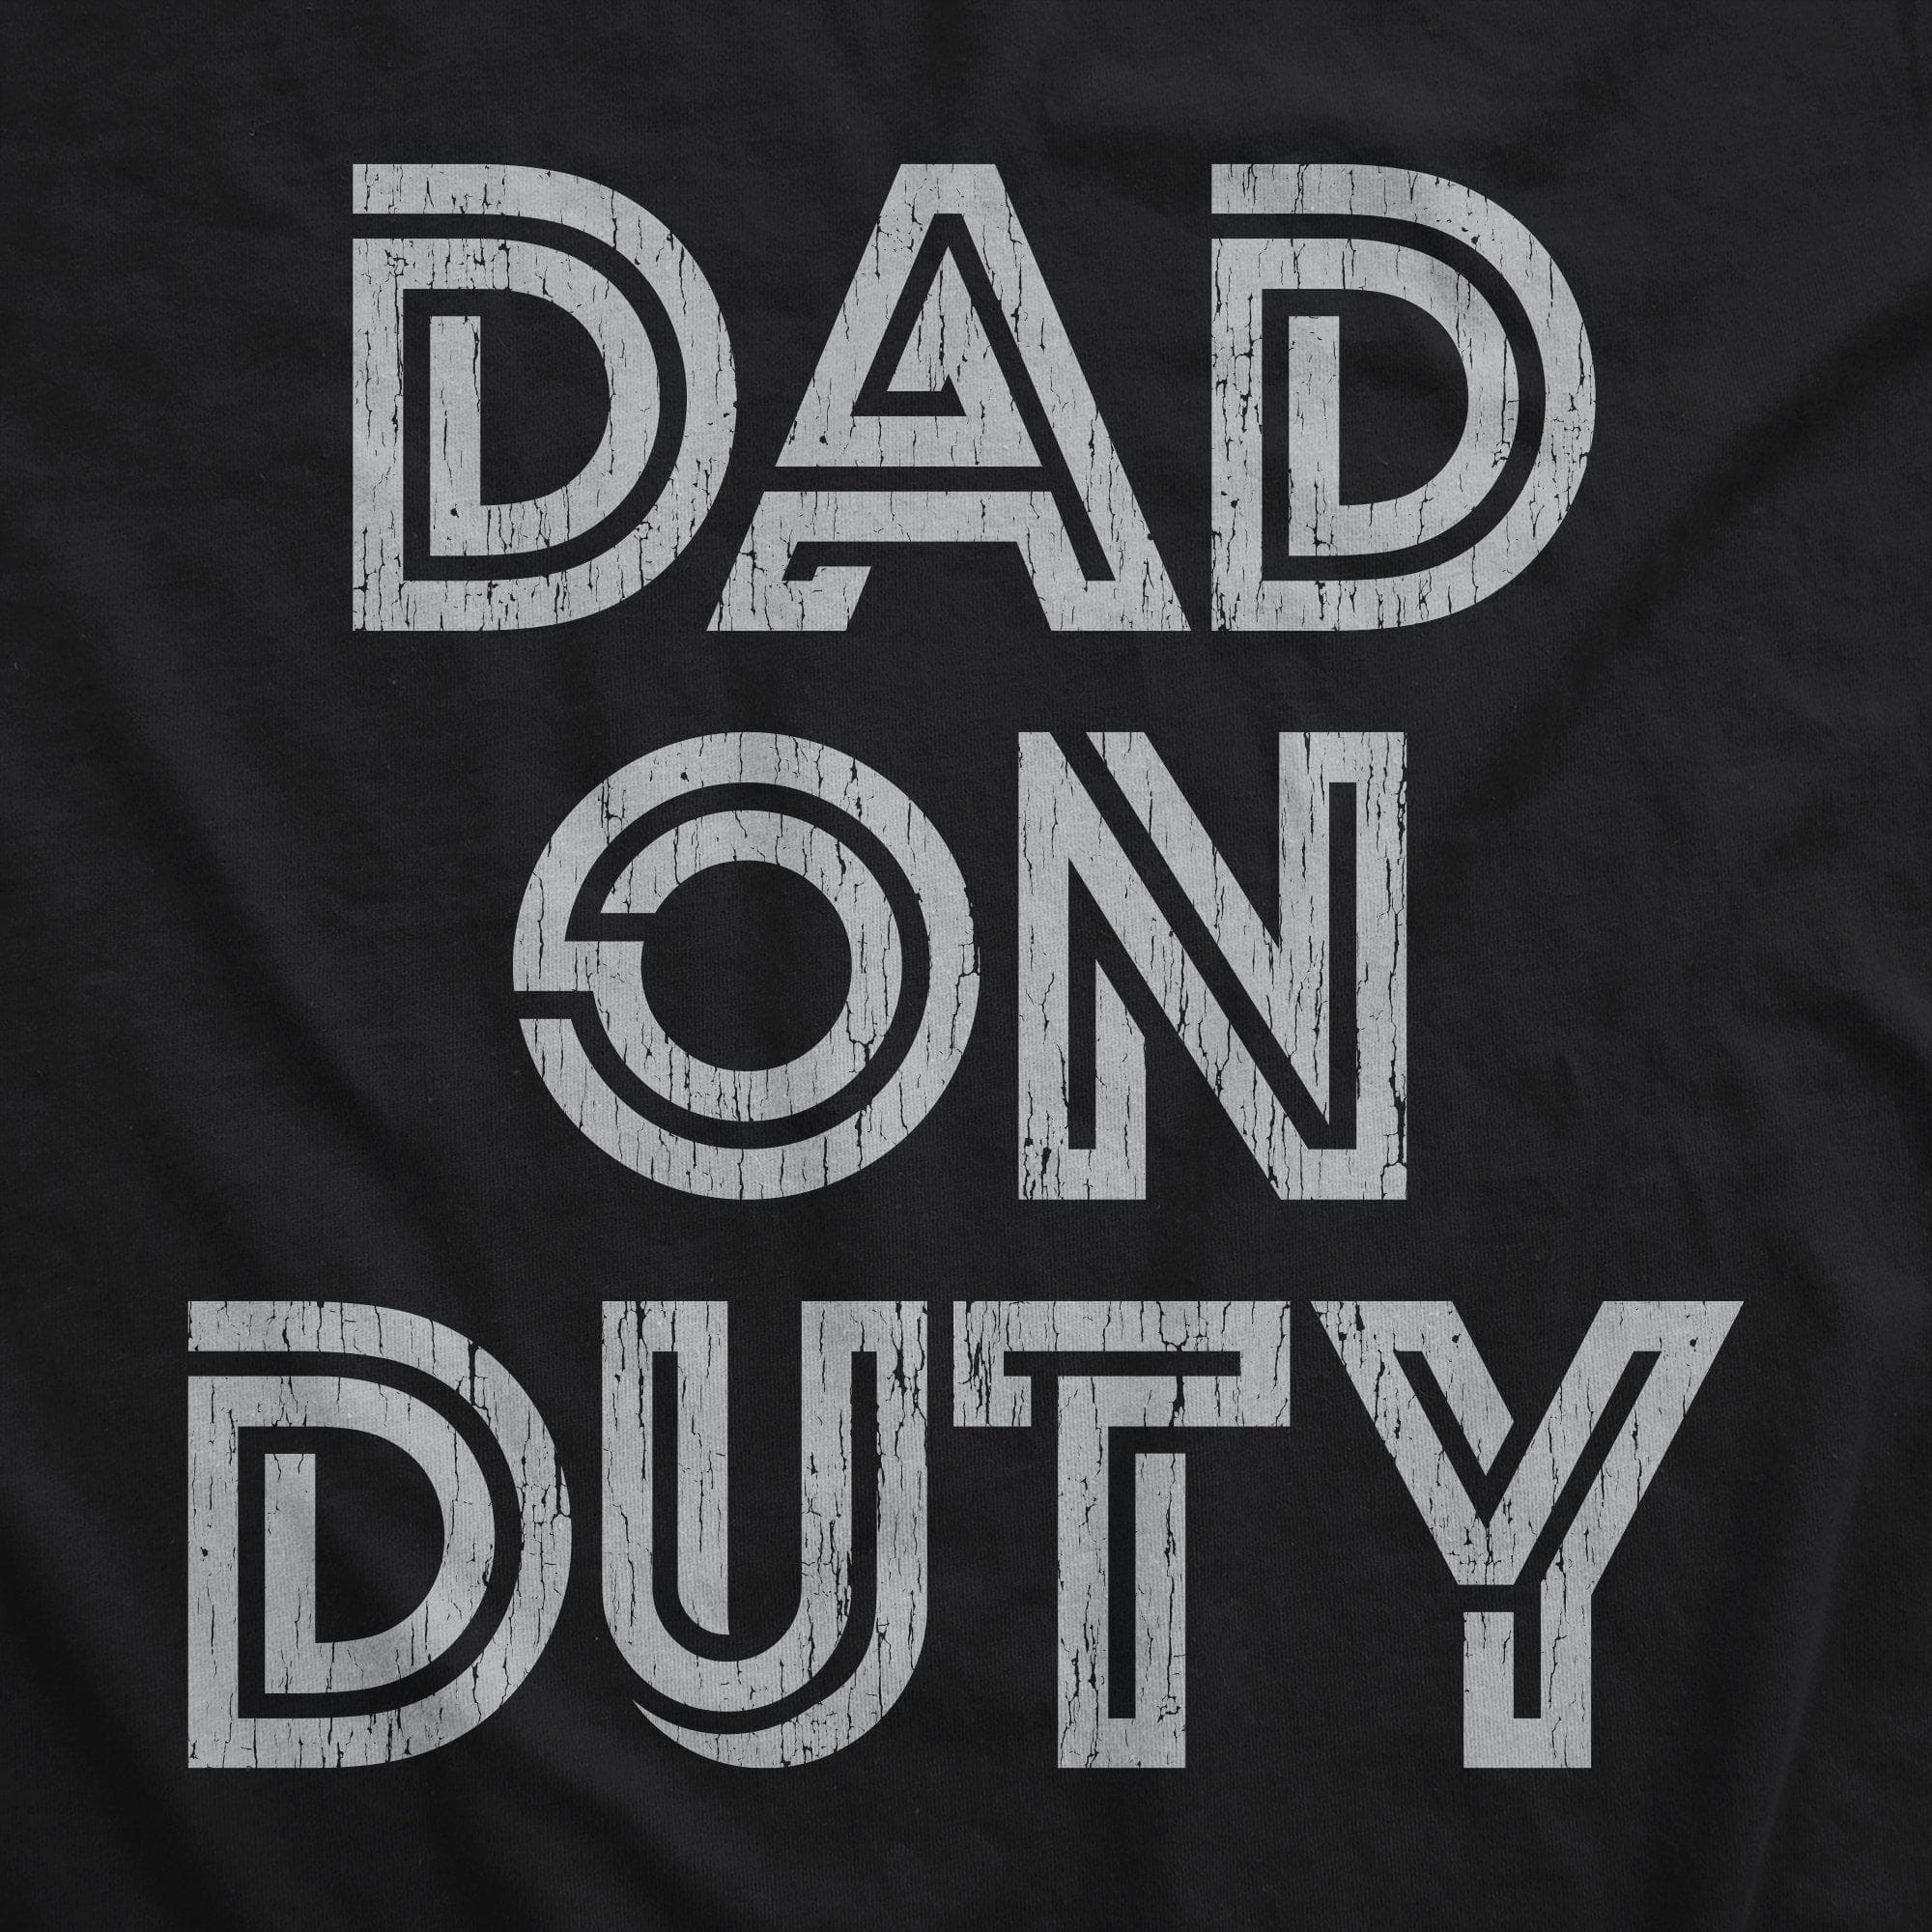 Dad On Duty Face Mask Mask - Crazy Dog T-Shirts